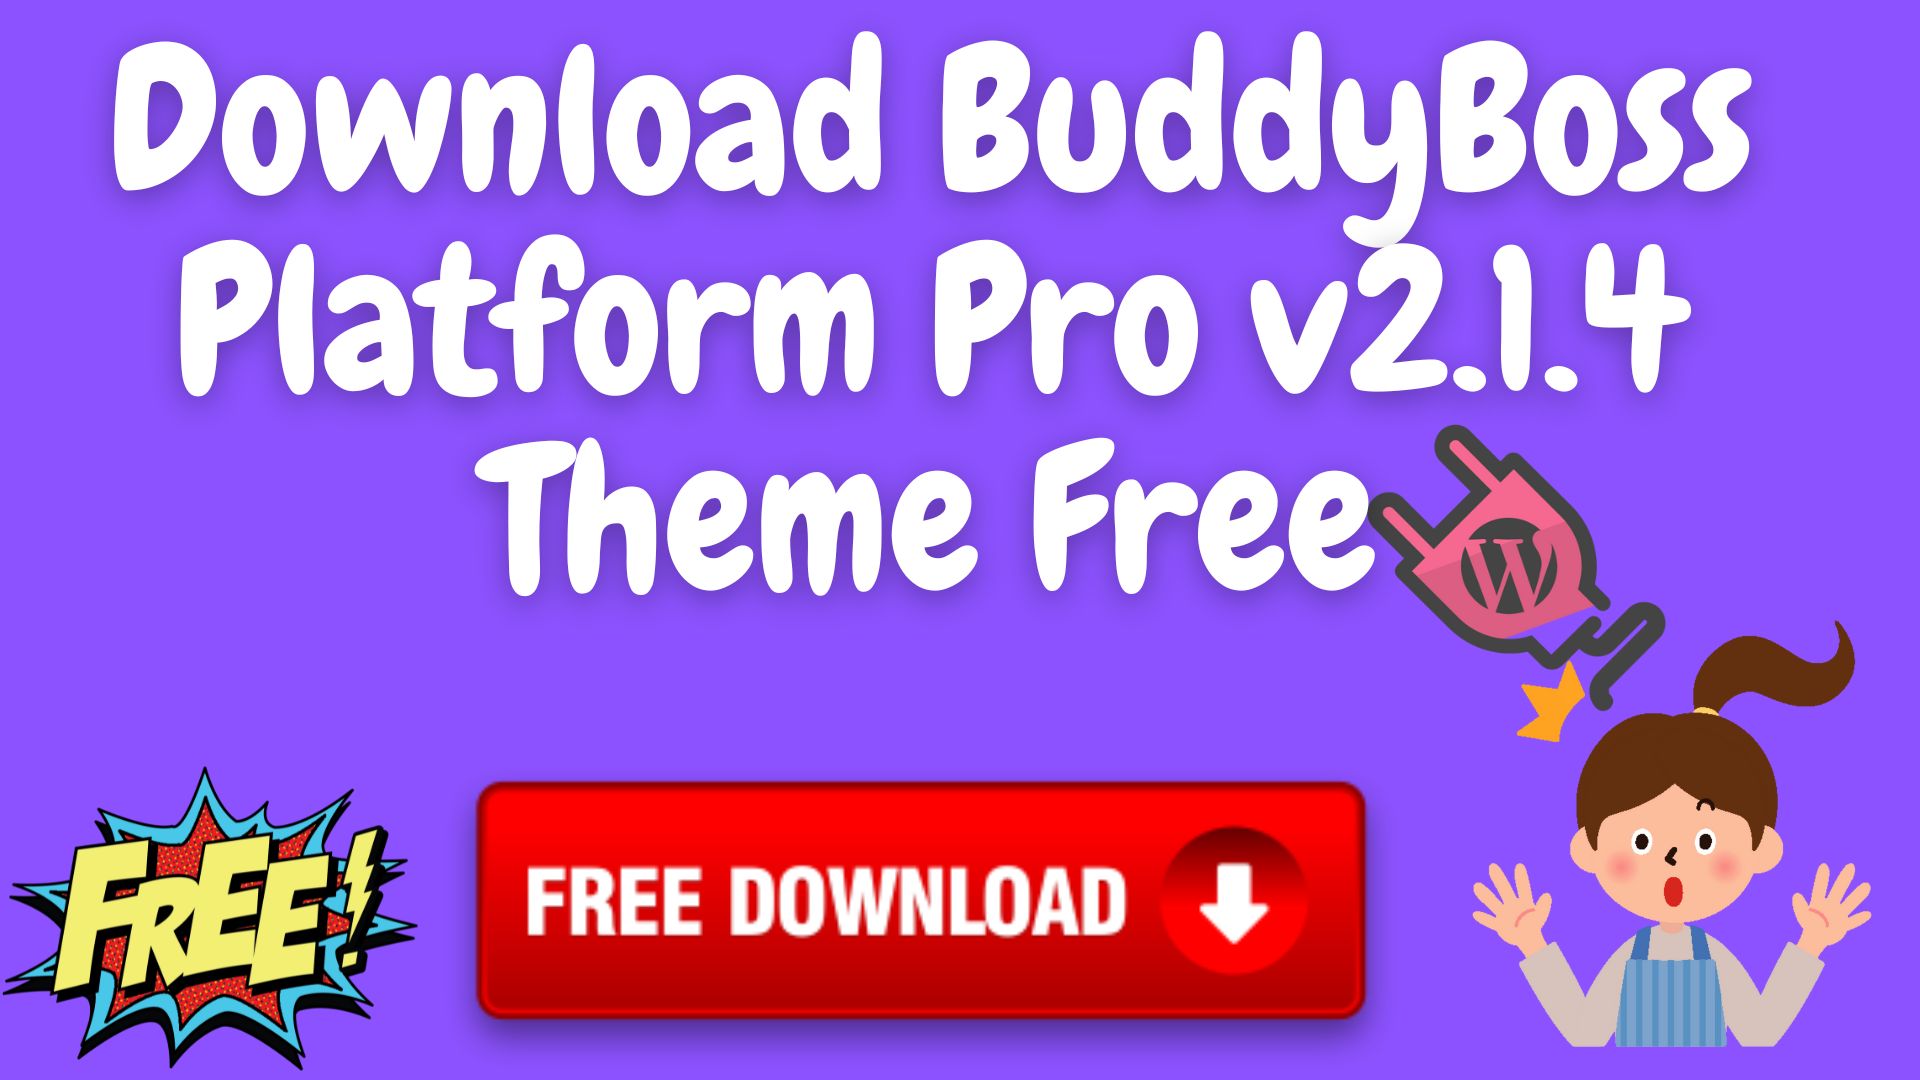 Download buddyboss platform pro v2. 1. 4 theme free